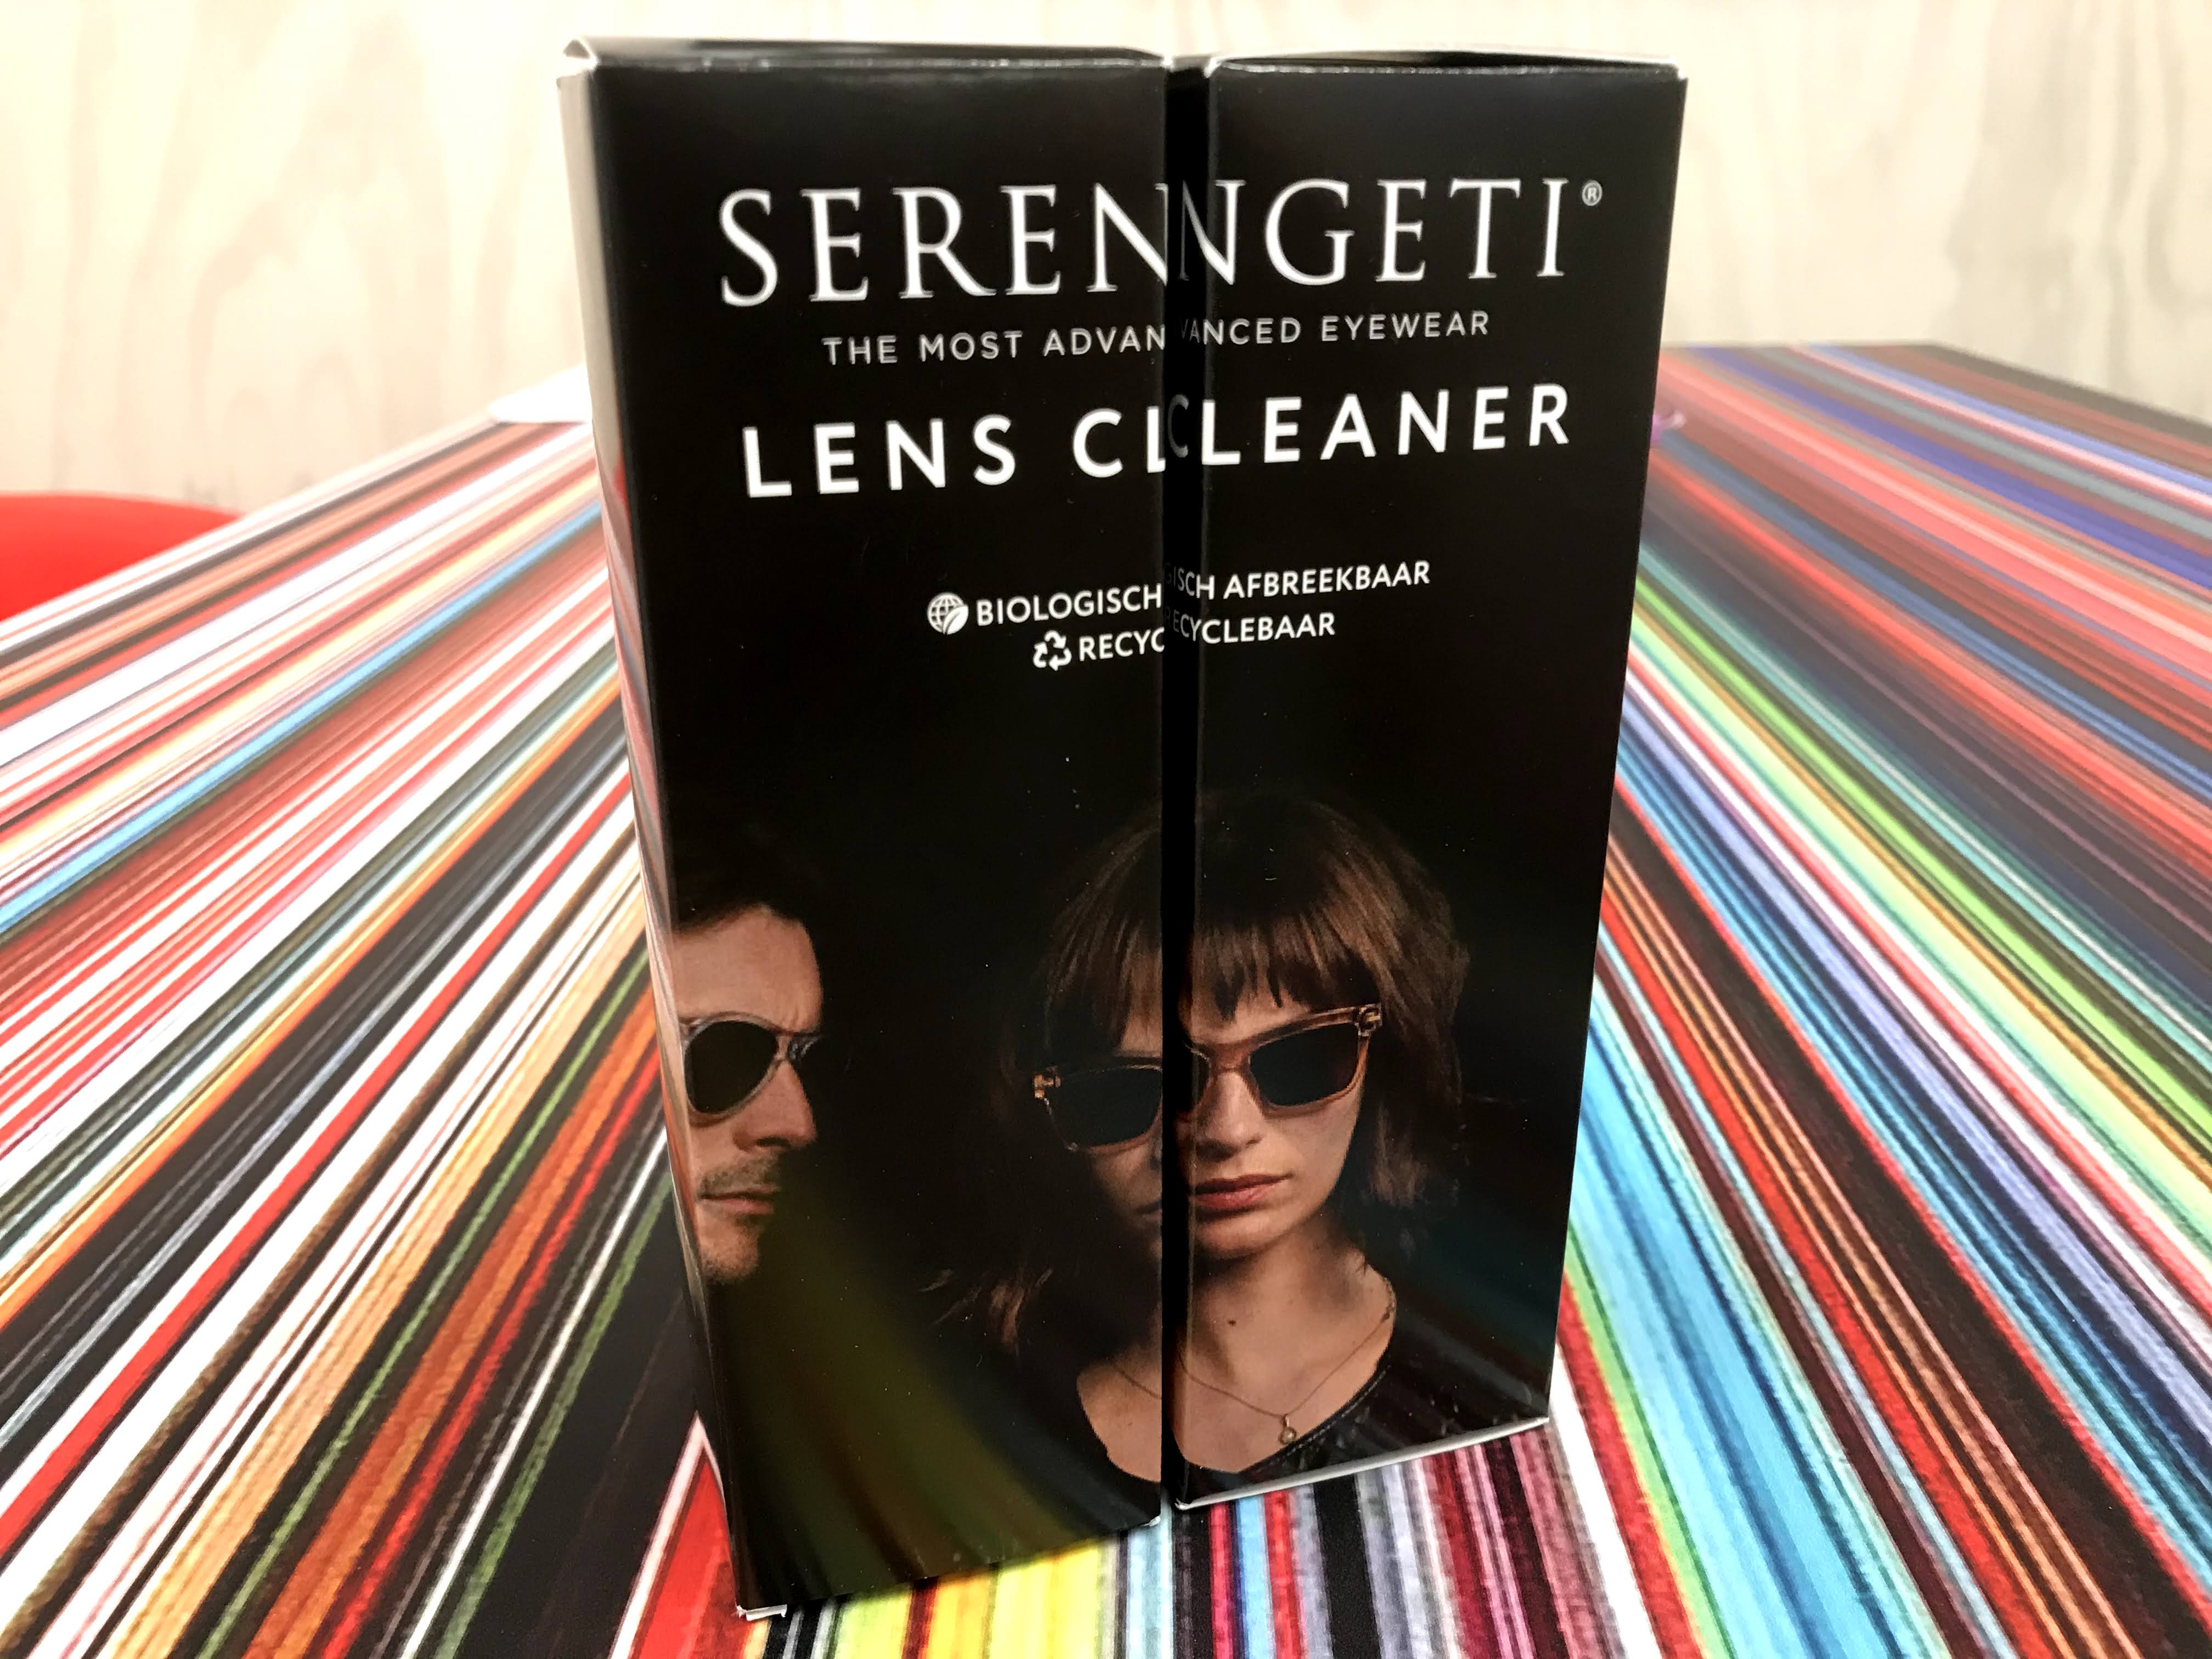 Serengeti private label verpakking lens cleaner